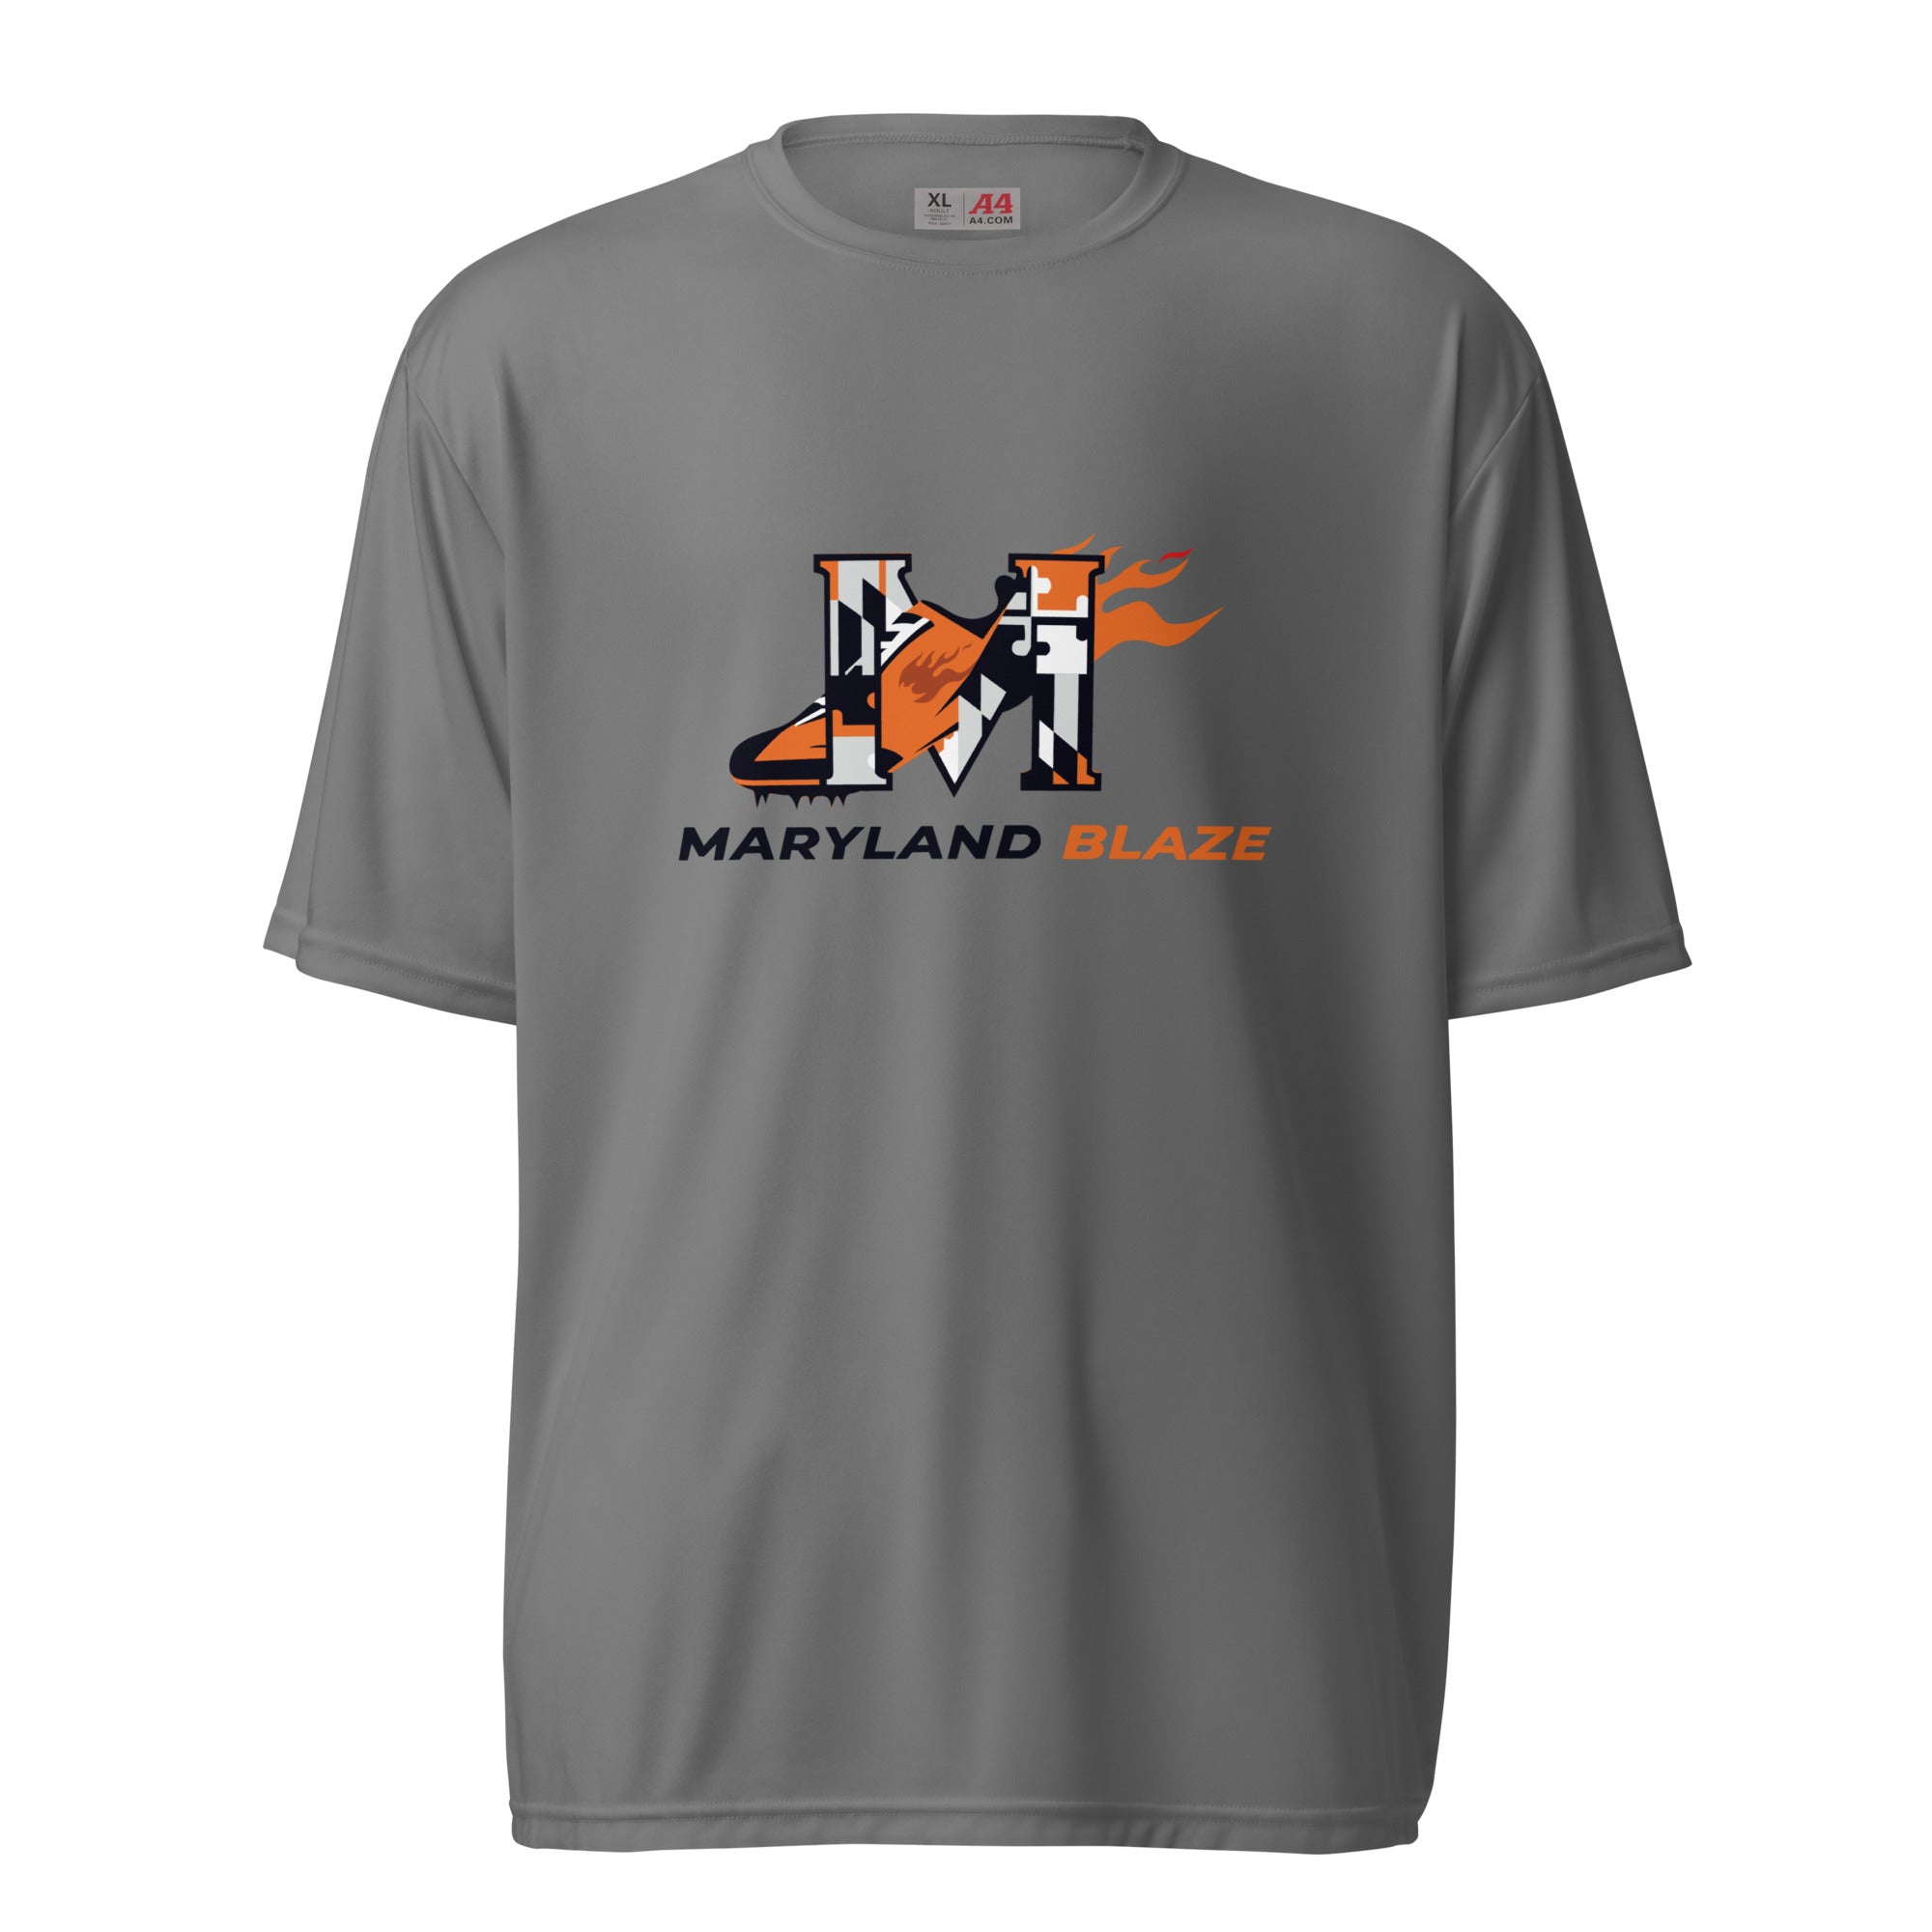 Maryland Blaze Unisex performance crew neck t-shirt